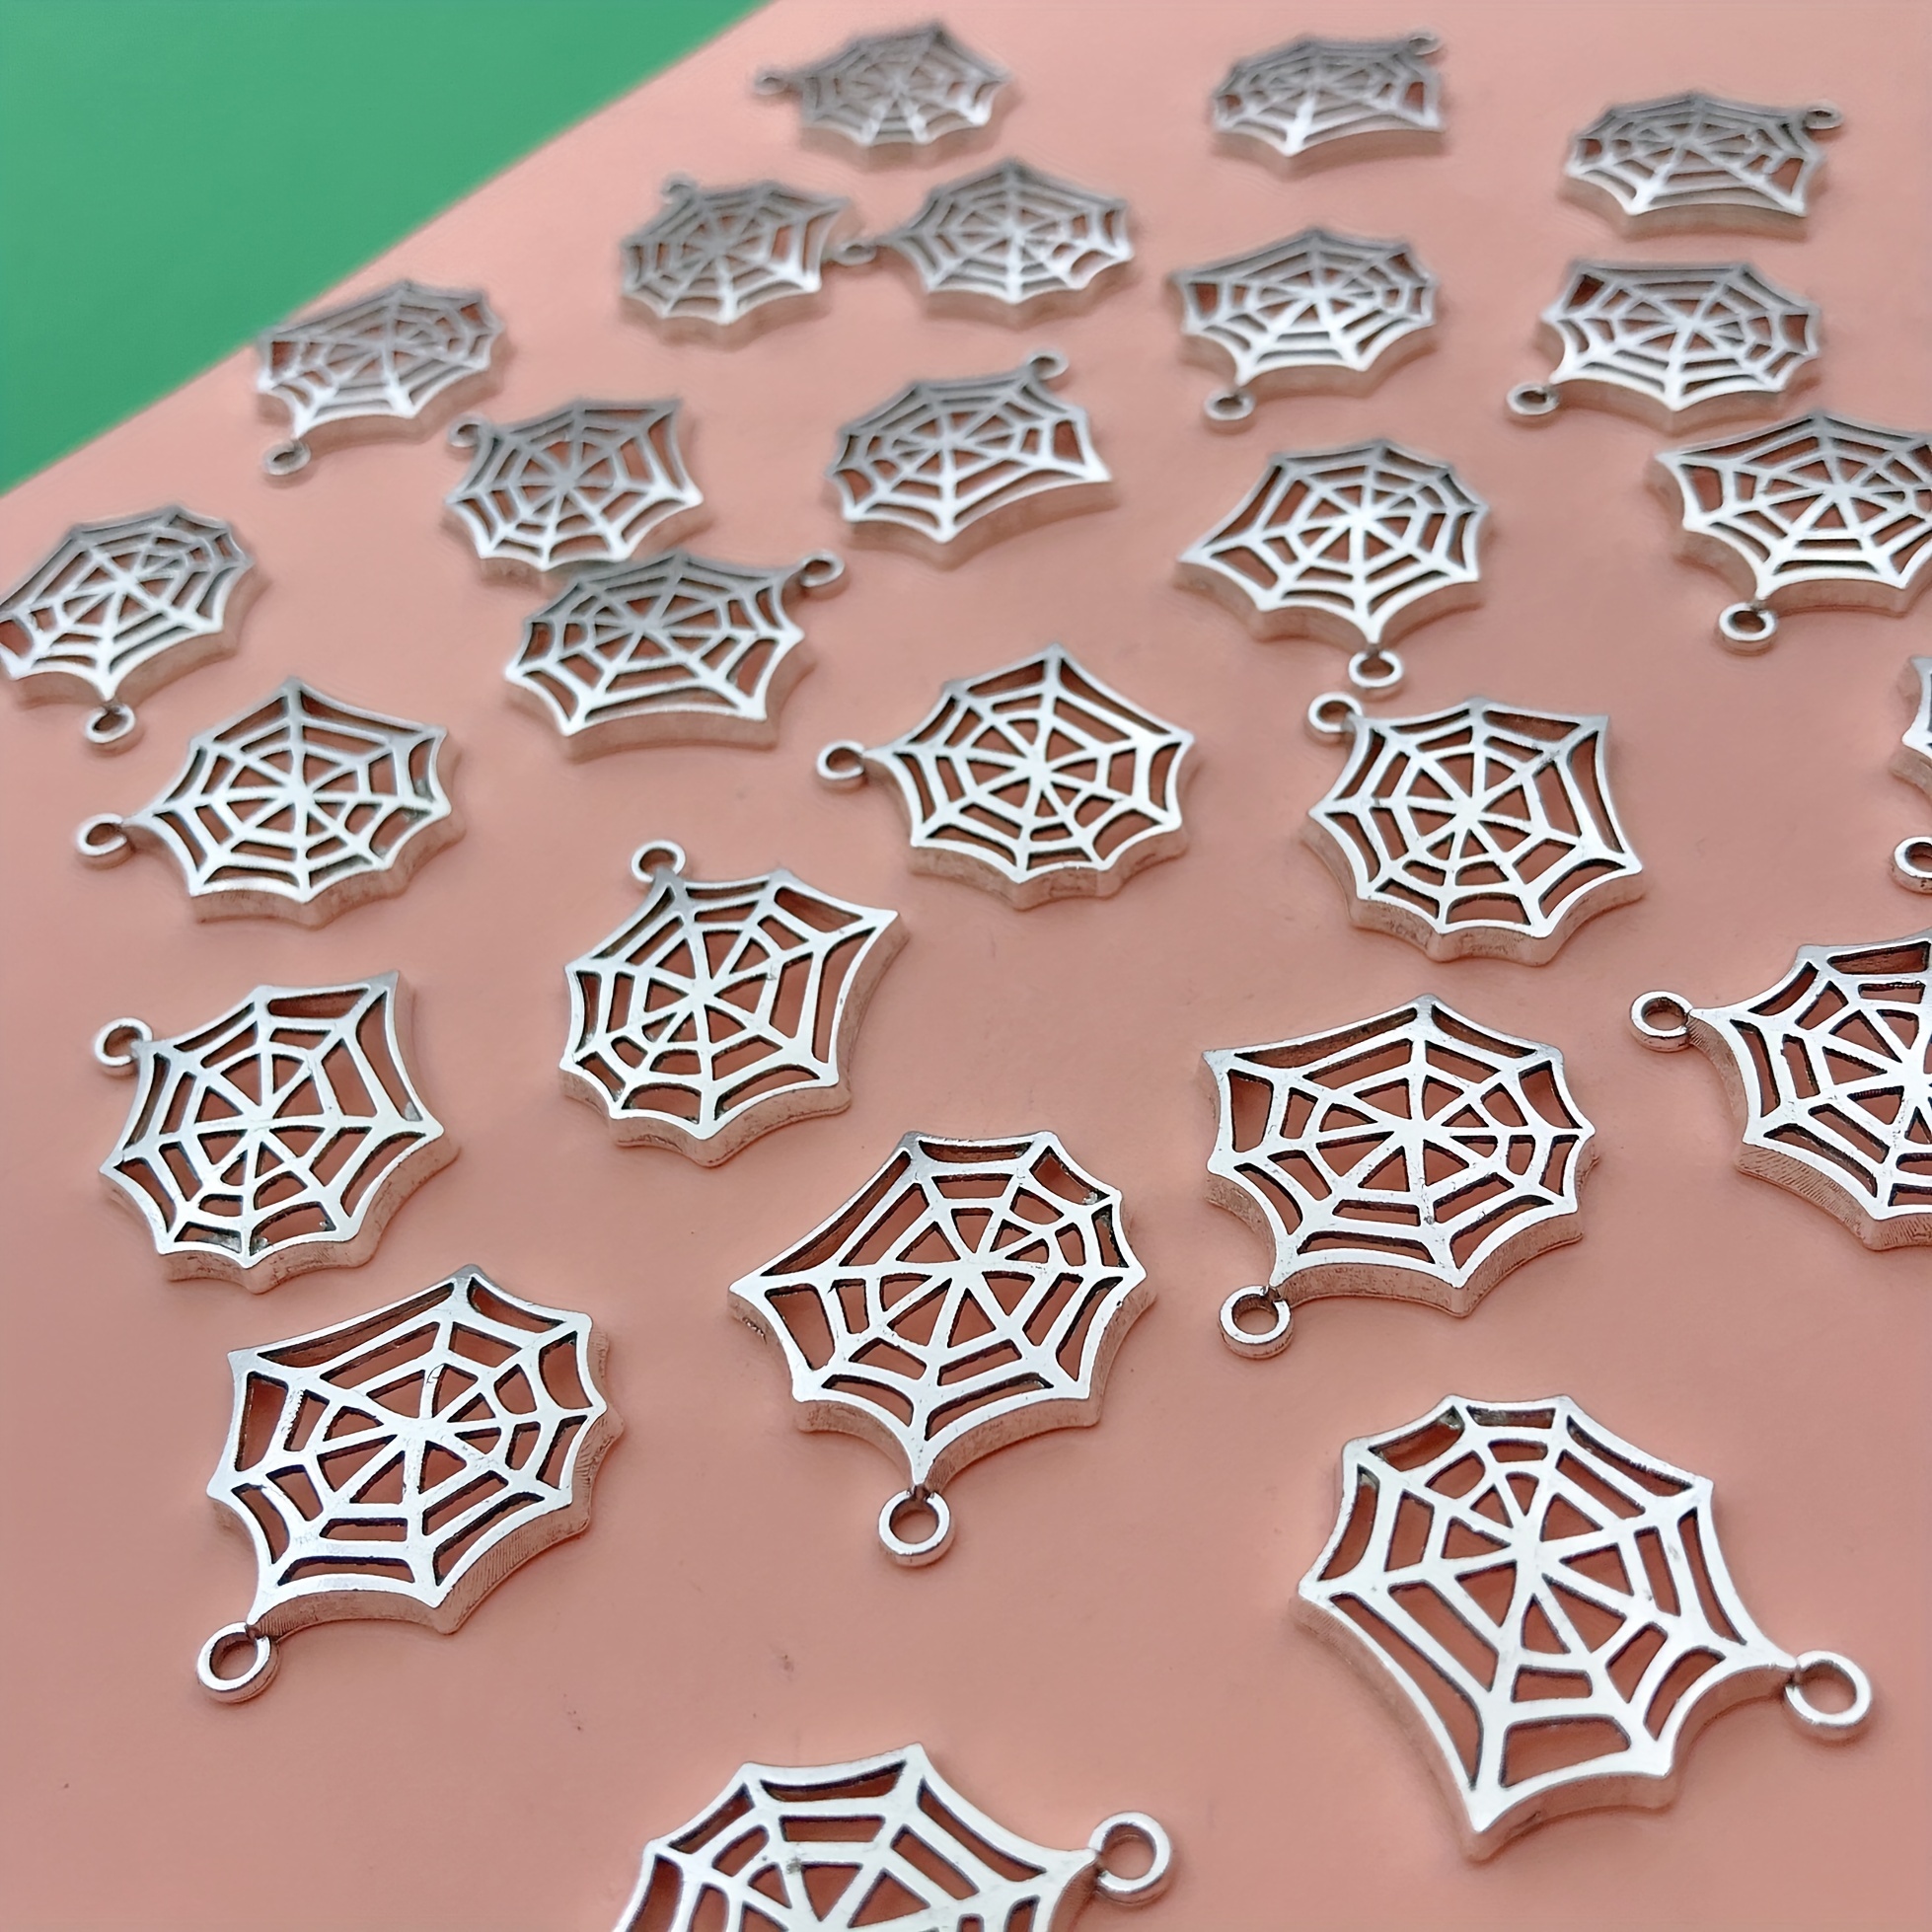 Randomly Mix 50Pcs/Set Zinc Alloy Antique Silver Halloween Series Spider Web Shaped Charms Pendants for DIY Necklace Bracelet Earrings Jewelry